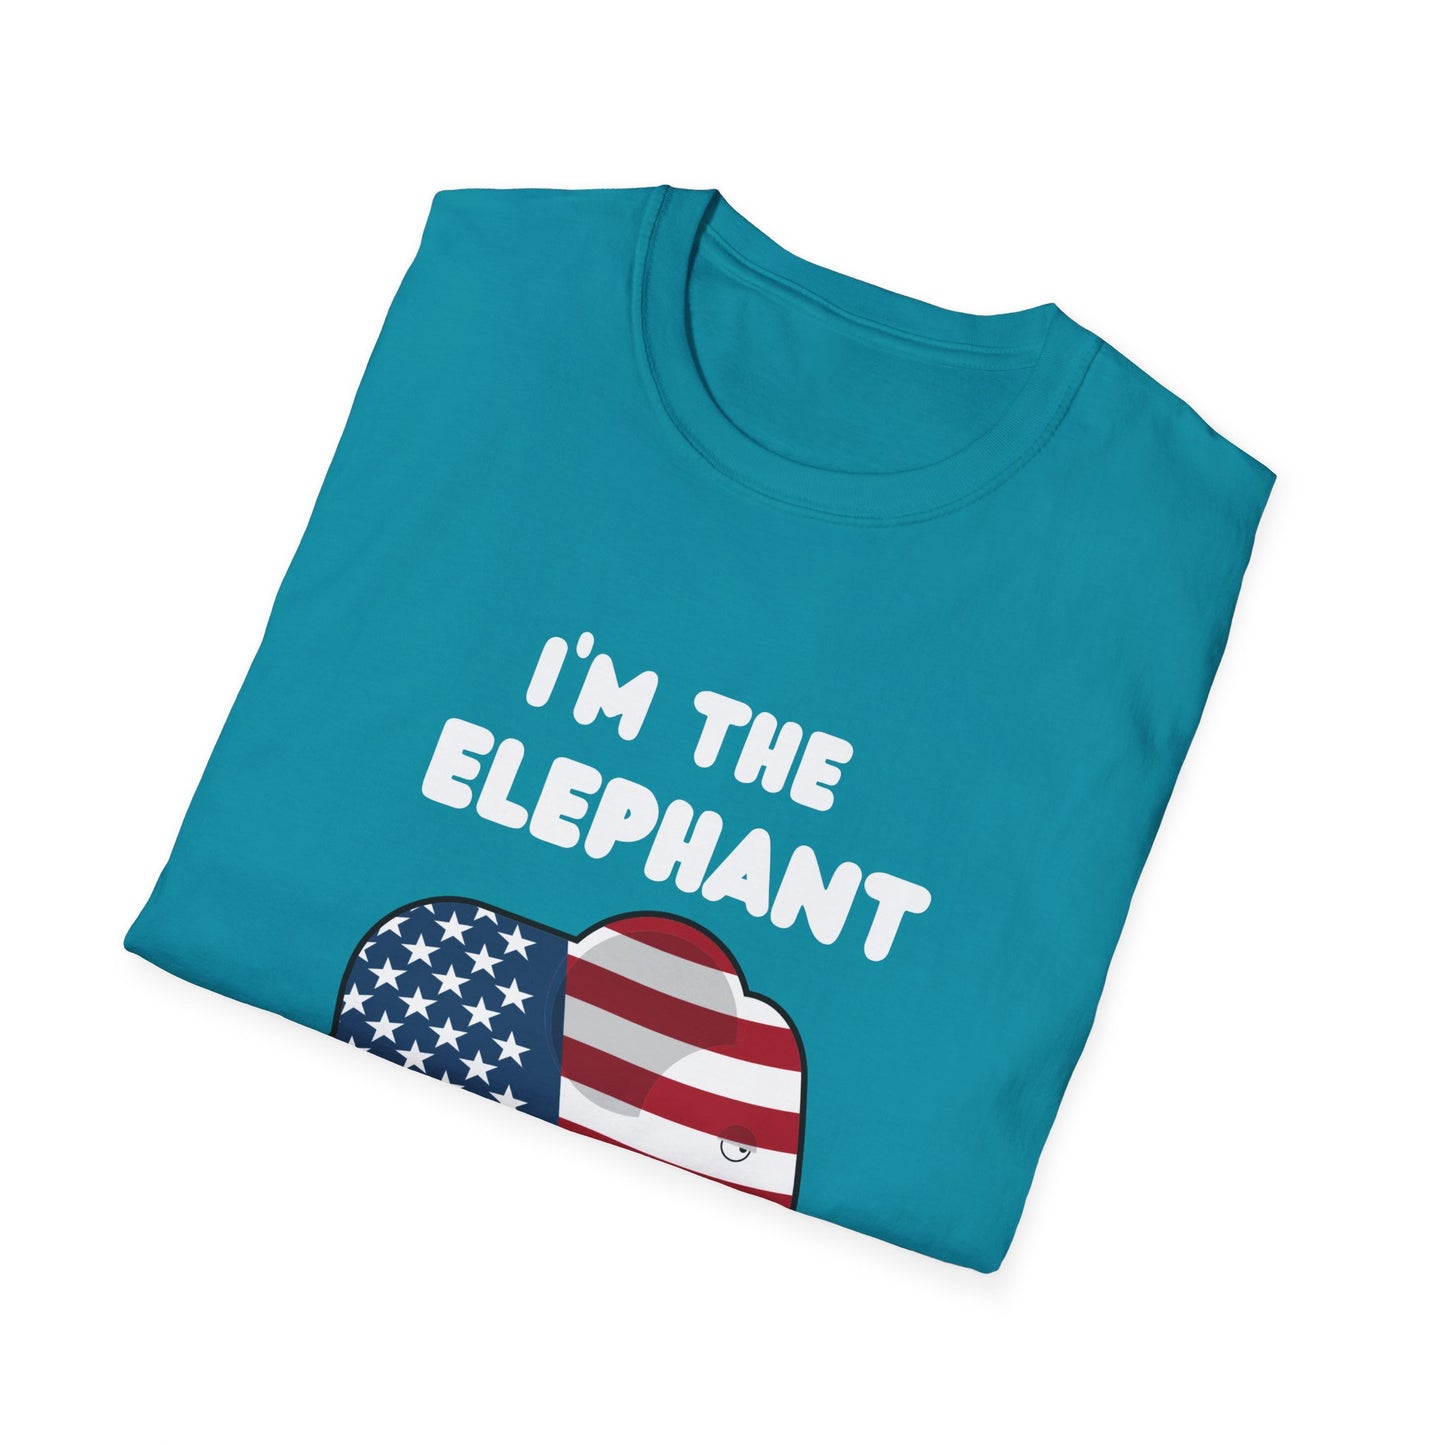 Elephant in Room Cartoon Women's Unisex/Plus Tshirt  XS-5XL (White Logo, Green & Blue Shirts)